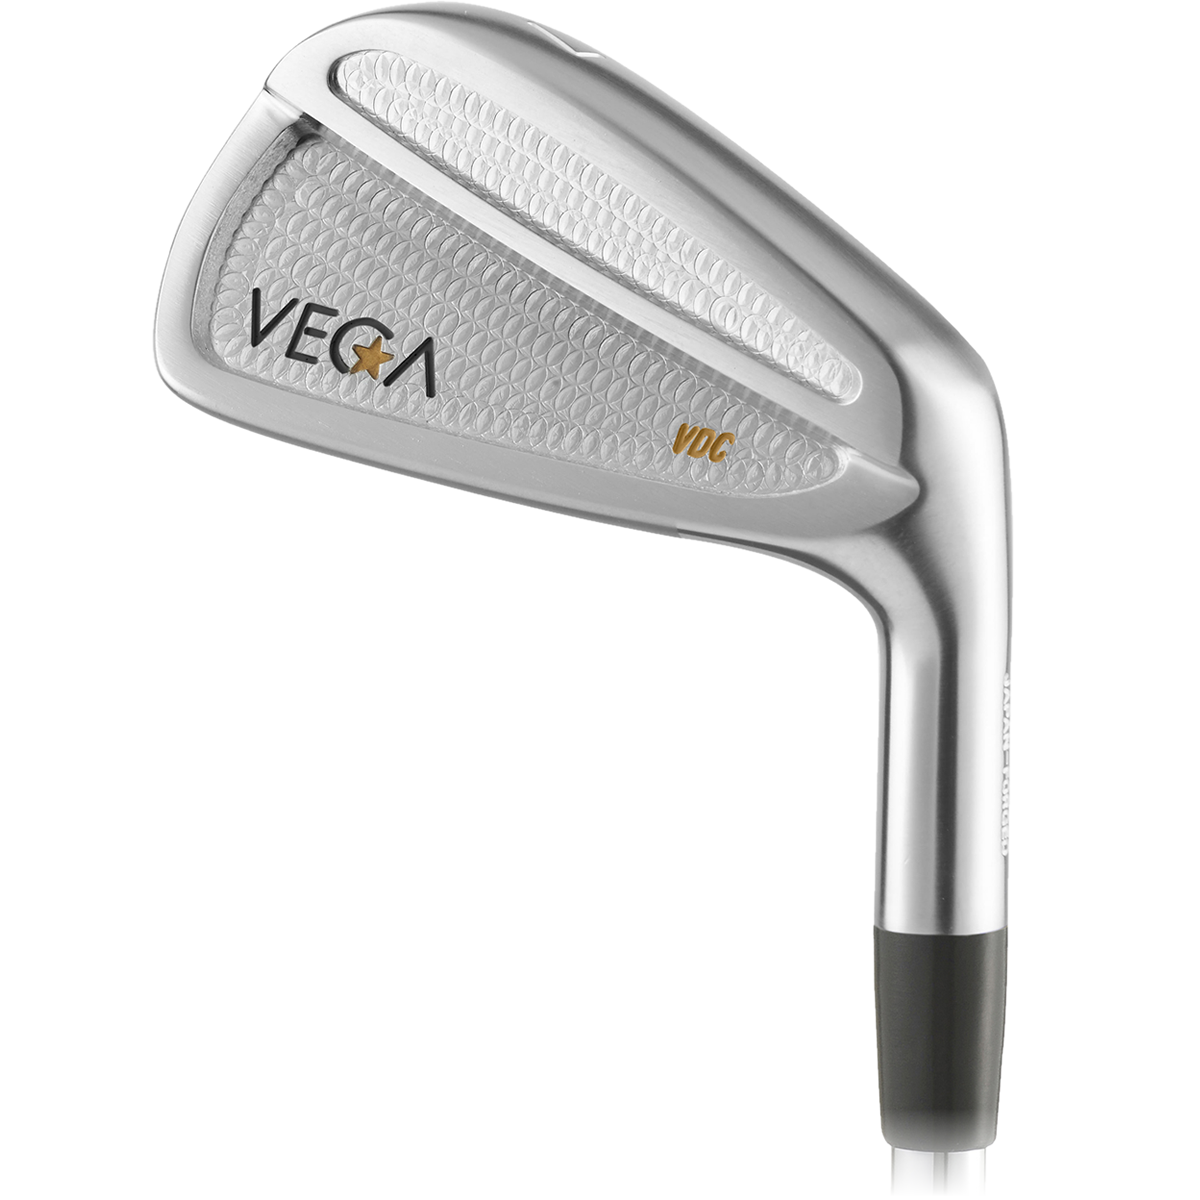 Vega VDC Irons image 1